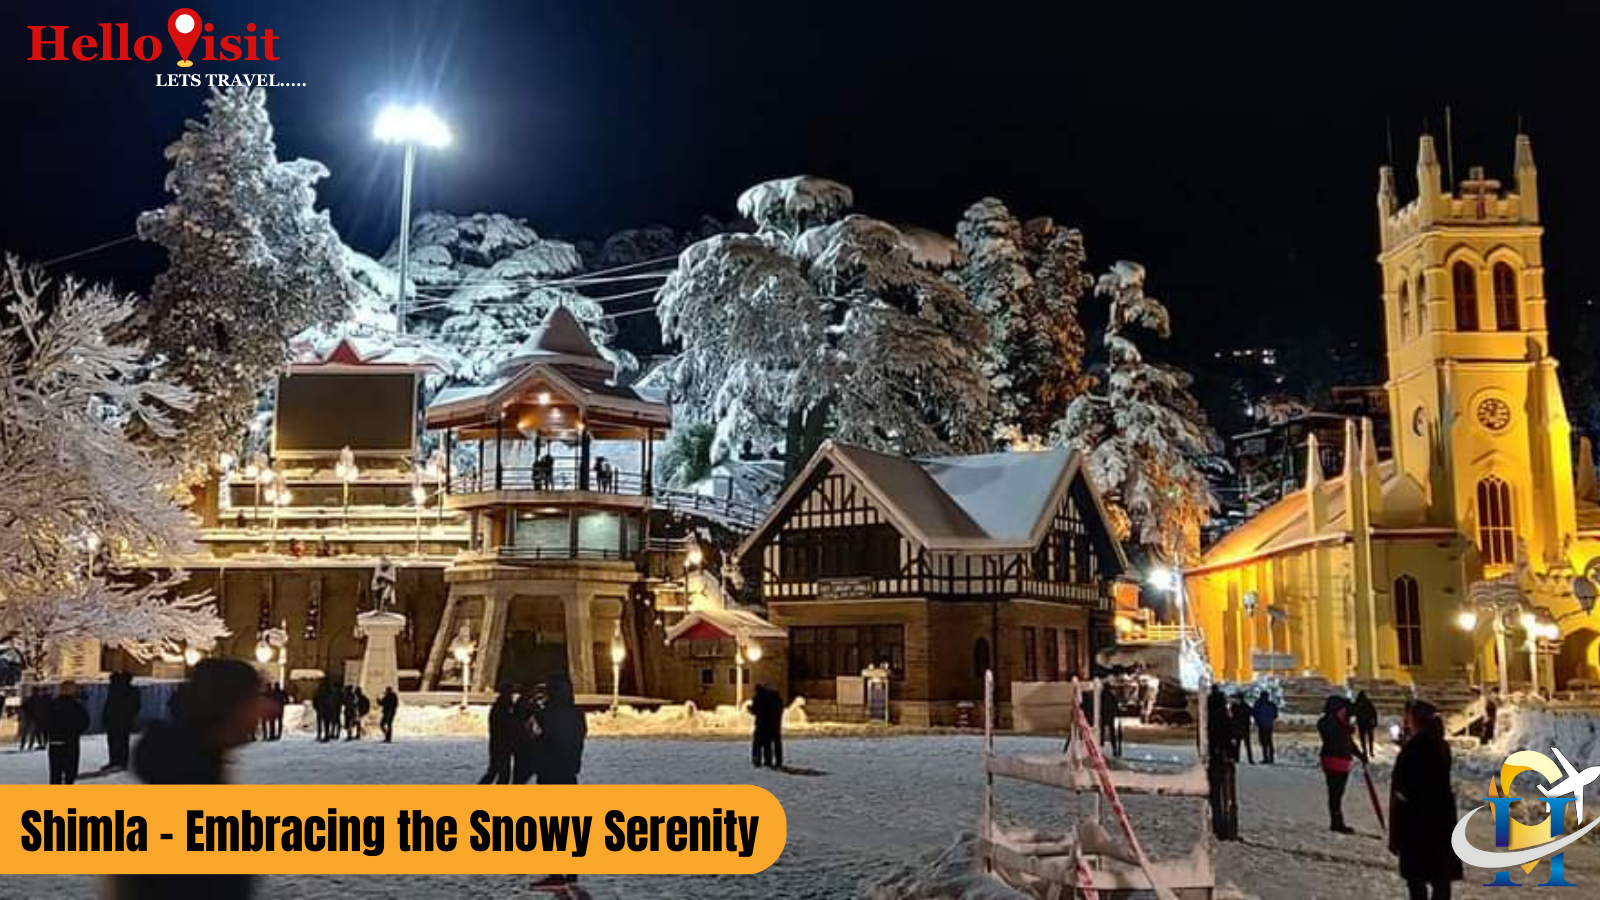  Shimla - Embracing the Snowy Serenity